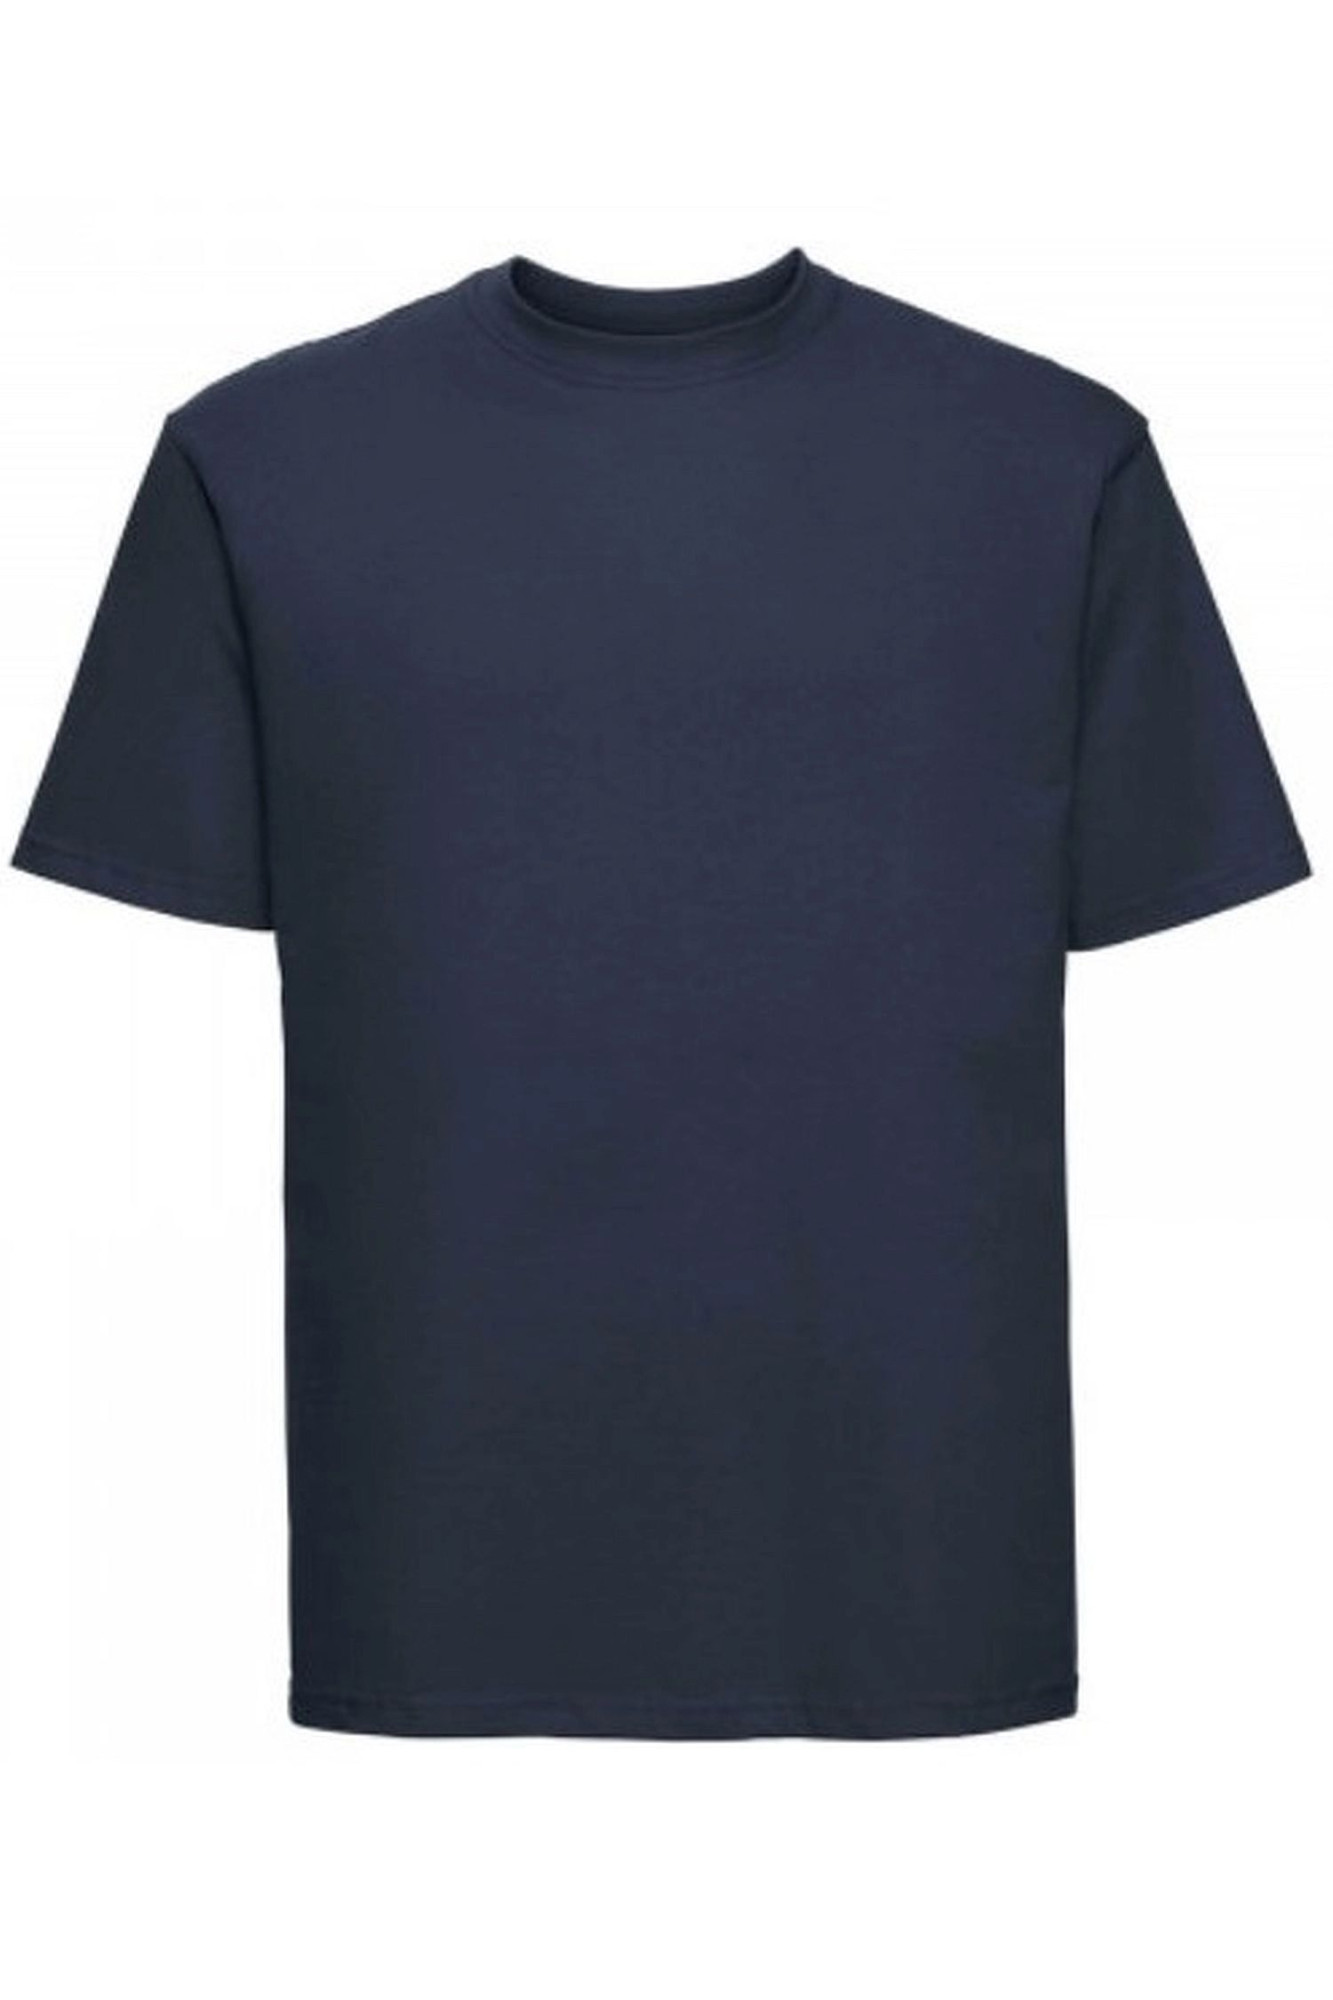 Pánské tričko 002 dark blue - NOVITI tmavě modrá XXL